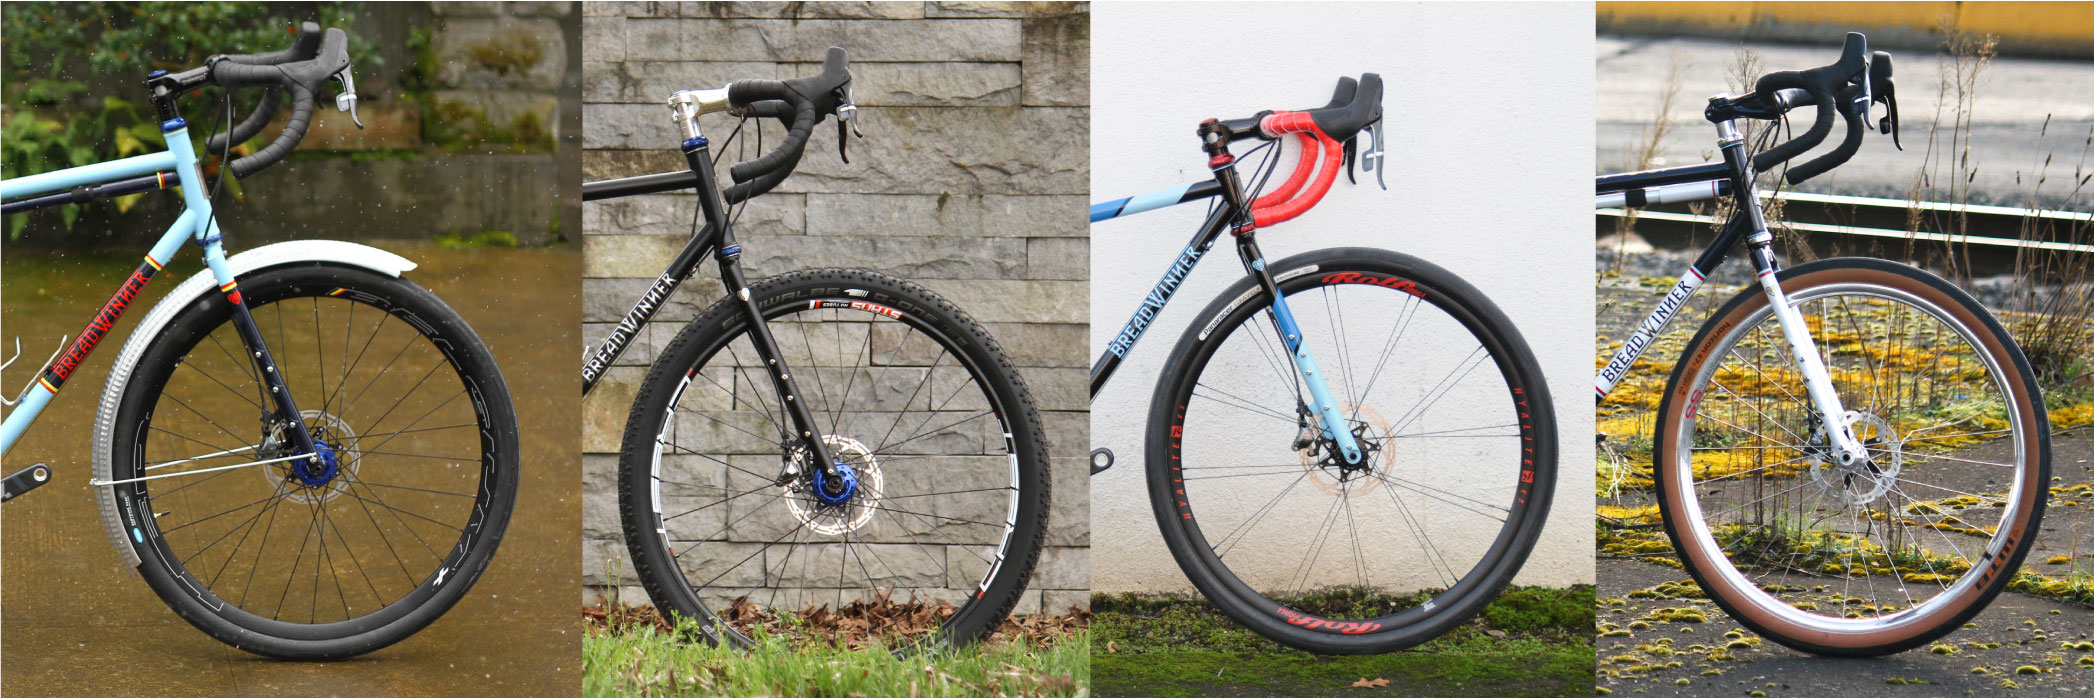 breadwinner_cycles_custom_steel_bikes_portland_oregon_G-Road_gravel_bike_banner_05